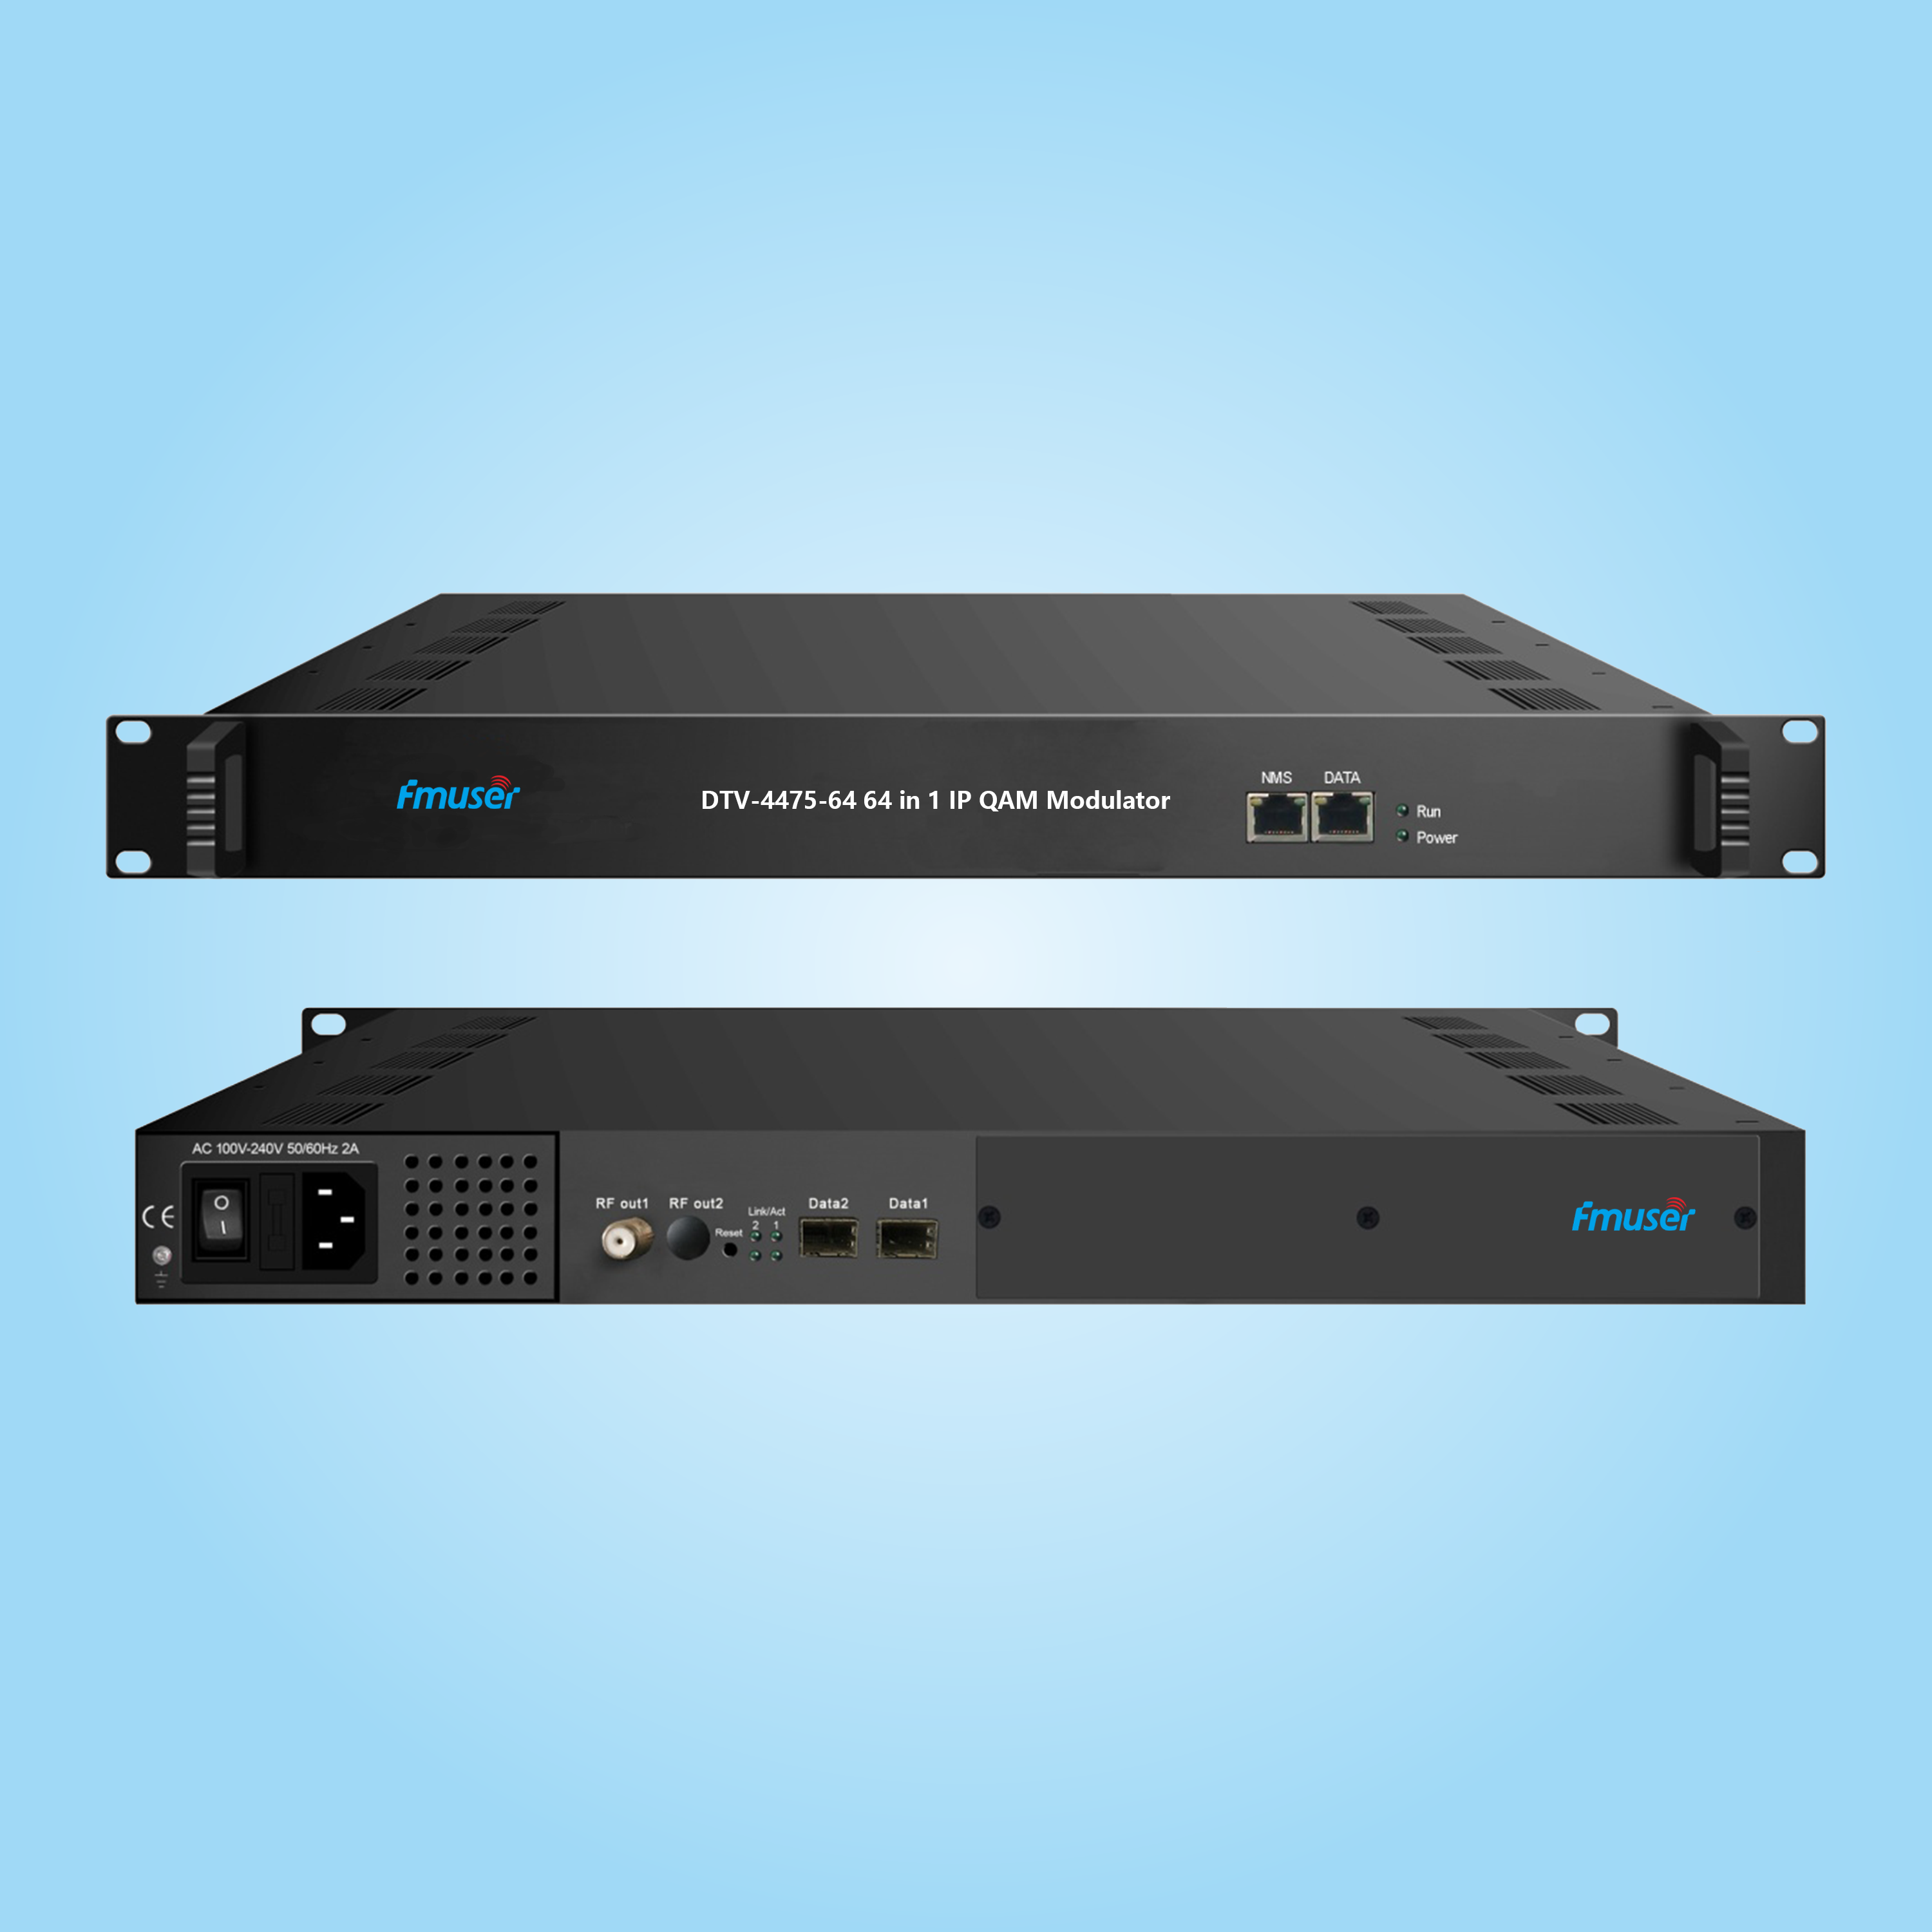 DTV-4475-64 64 i 1 IP QAM Modulator